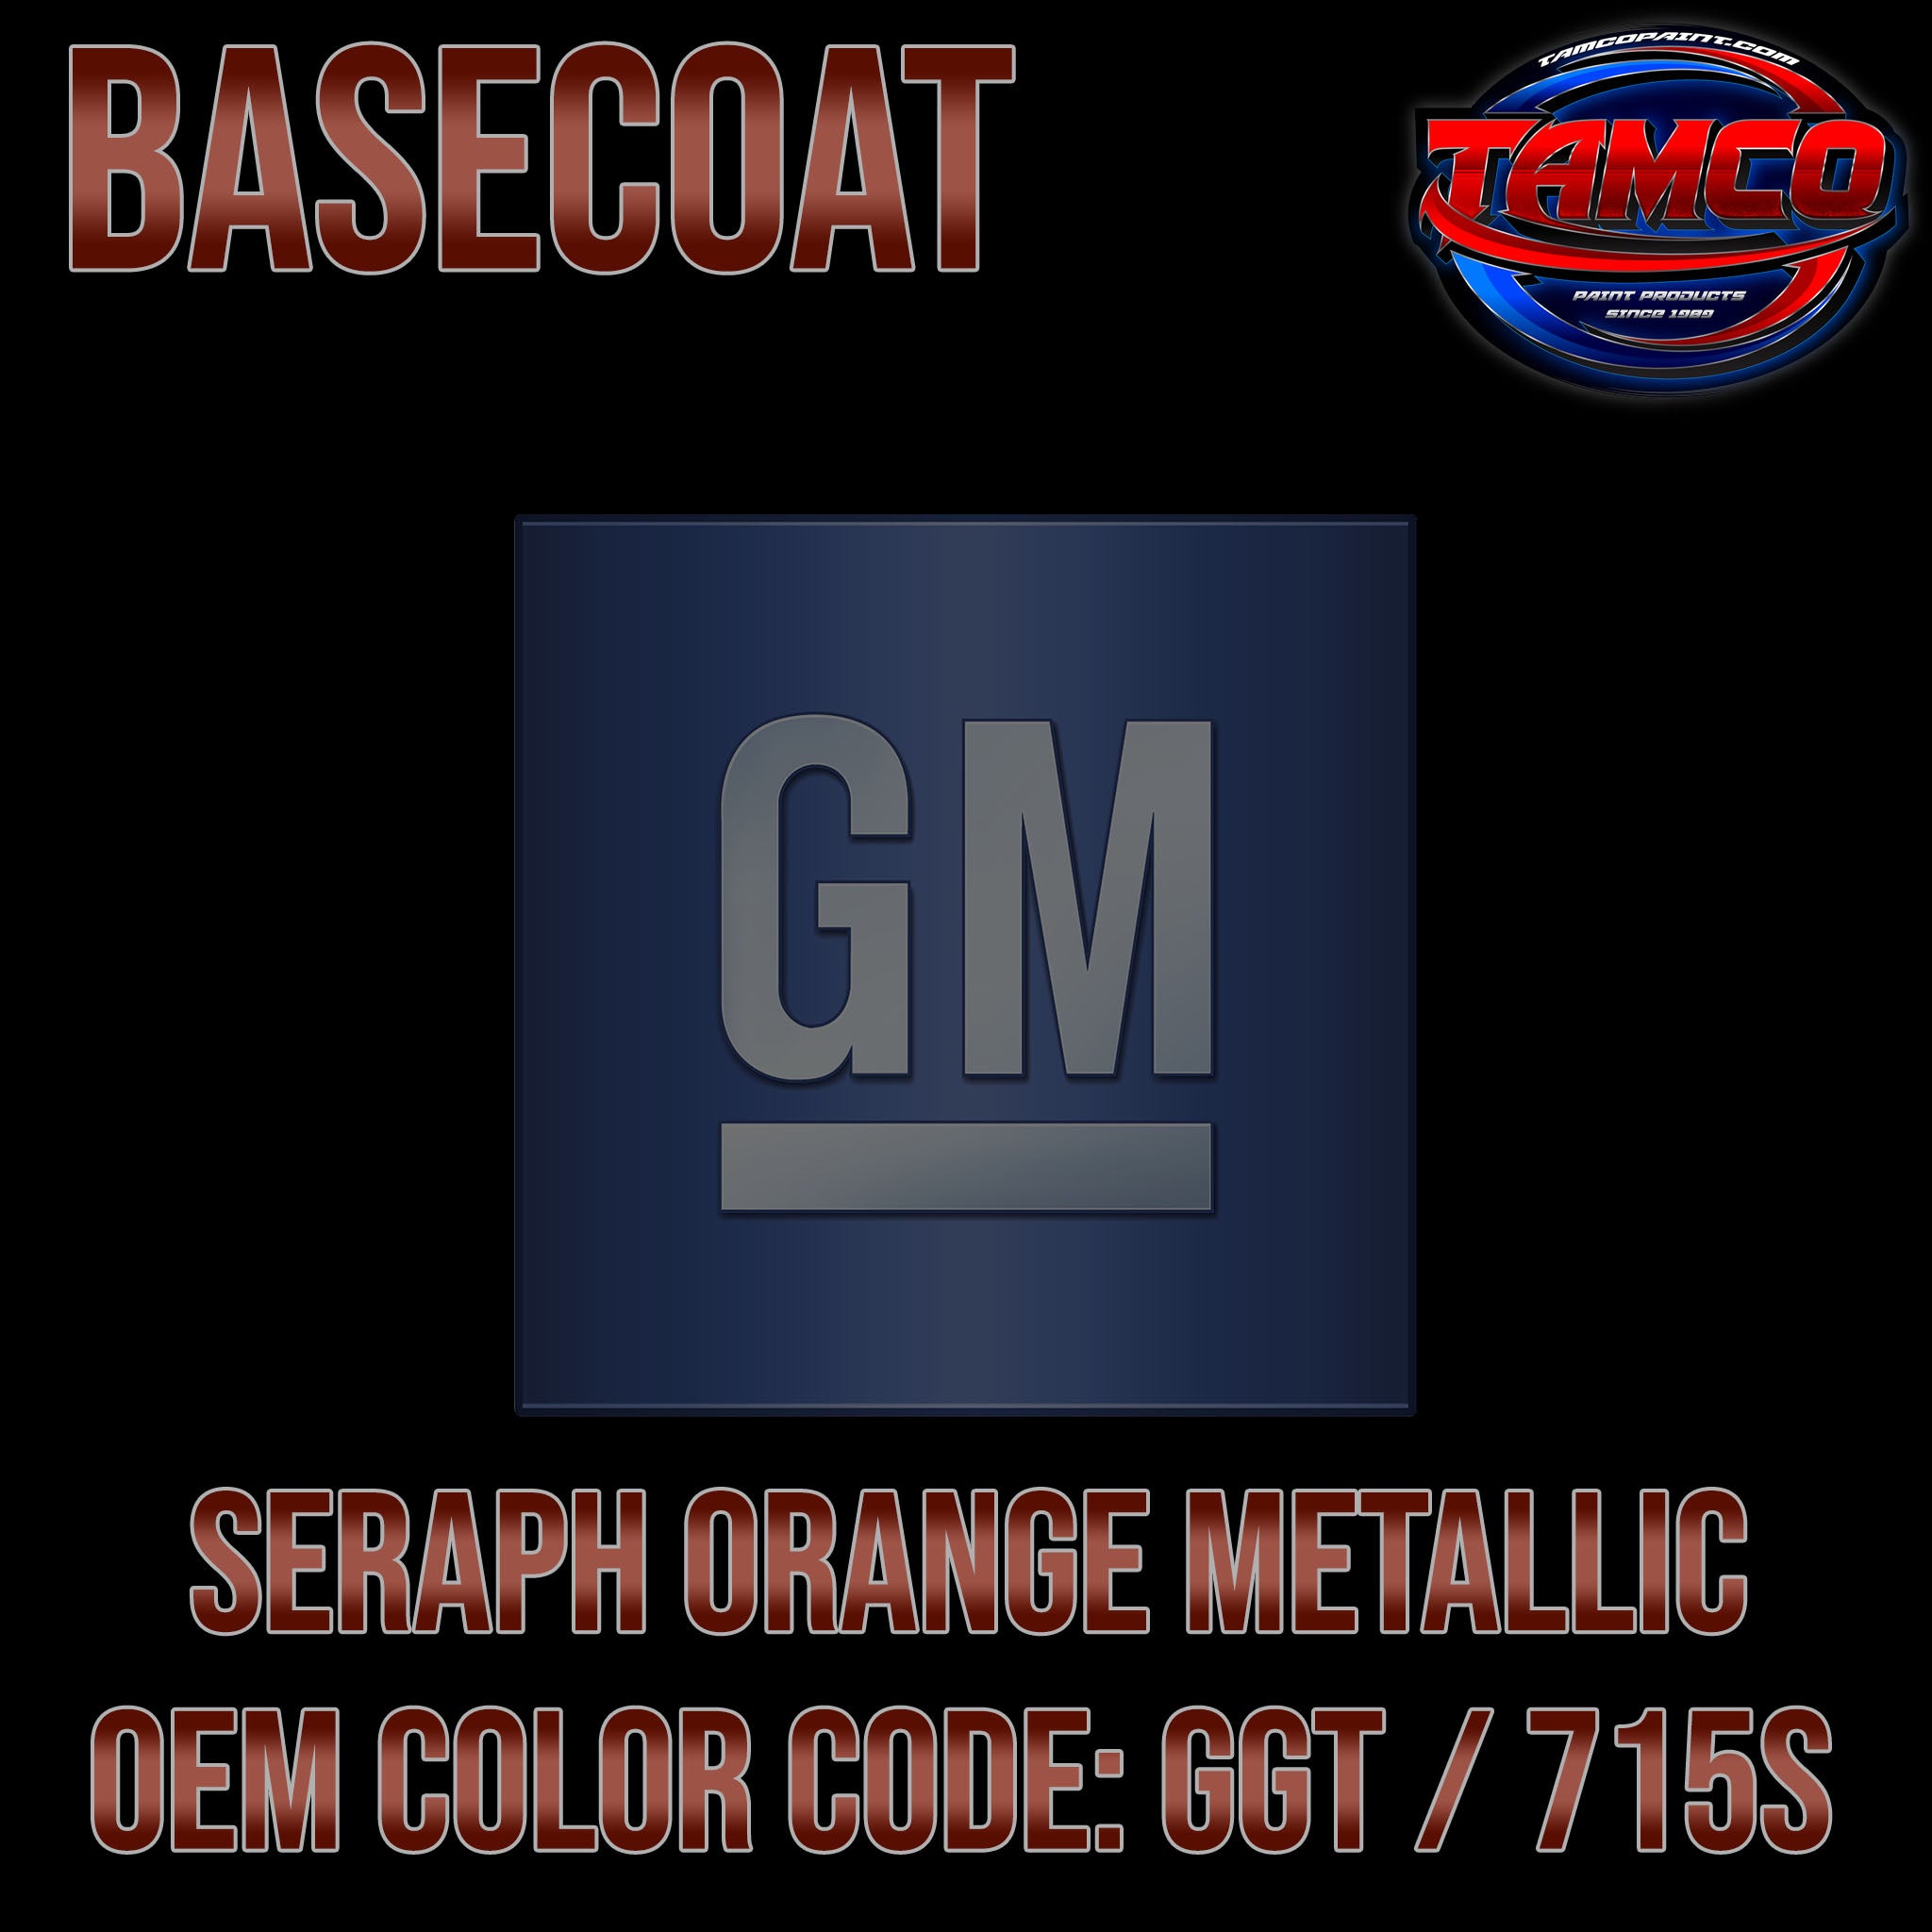 Sunburst Orange Metallic 1 Gallon Urethane Basecoat Car Auto Body Paint